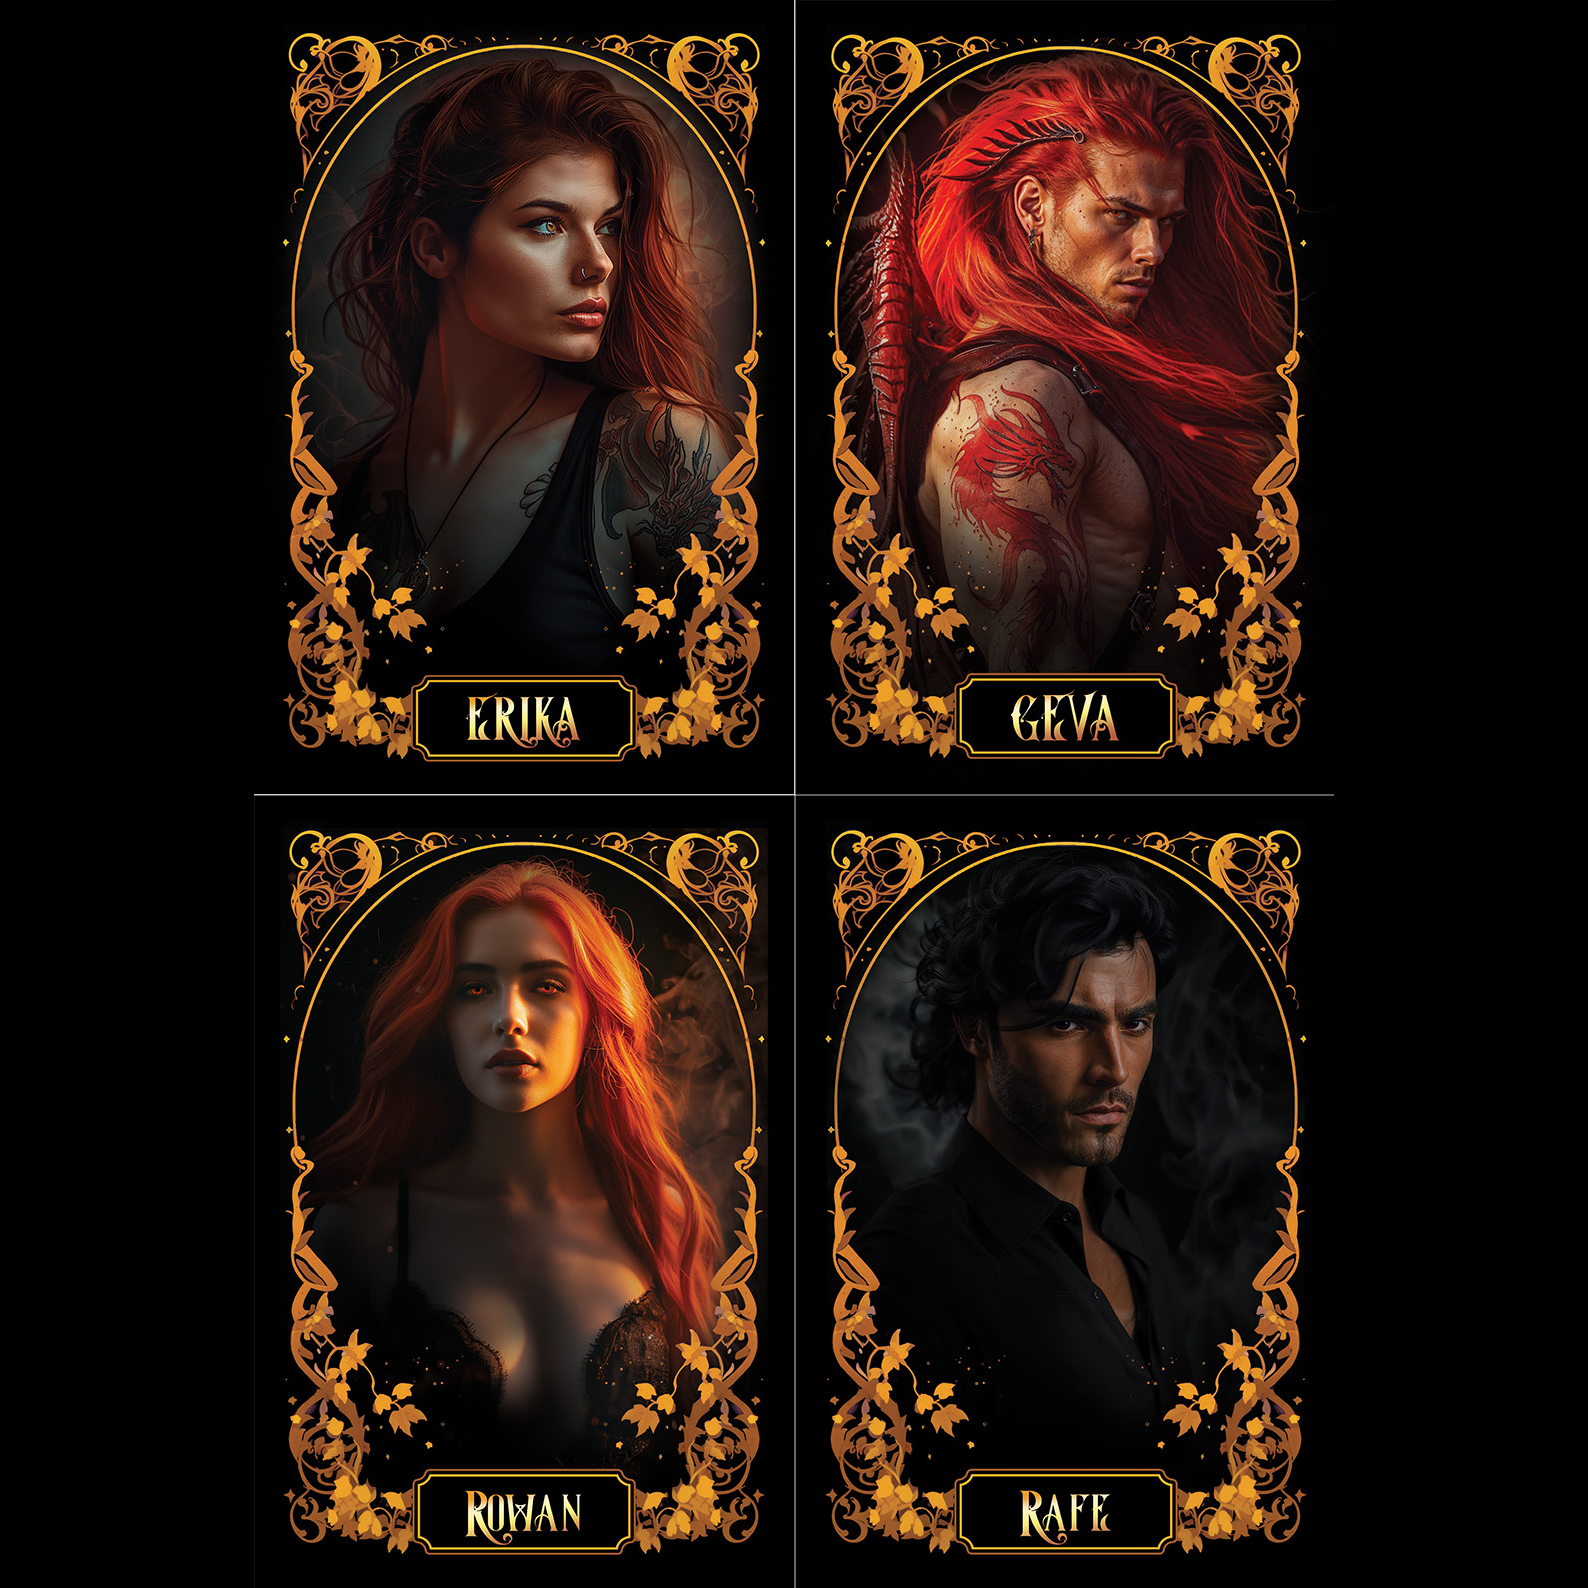 Character cards for Erika, Geva, Rowan, and Rafe